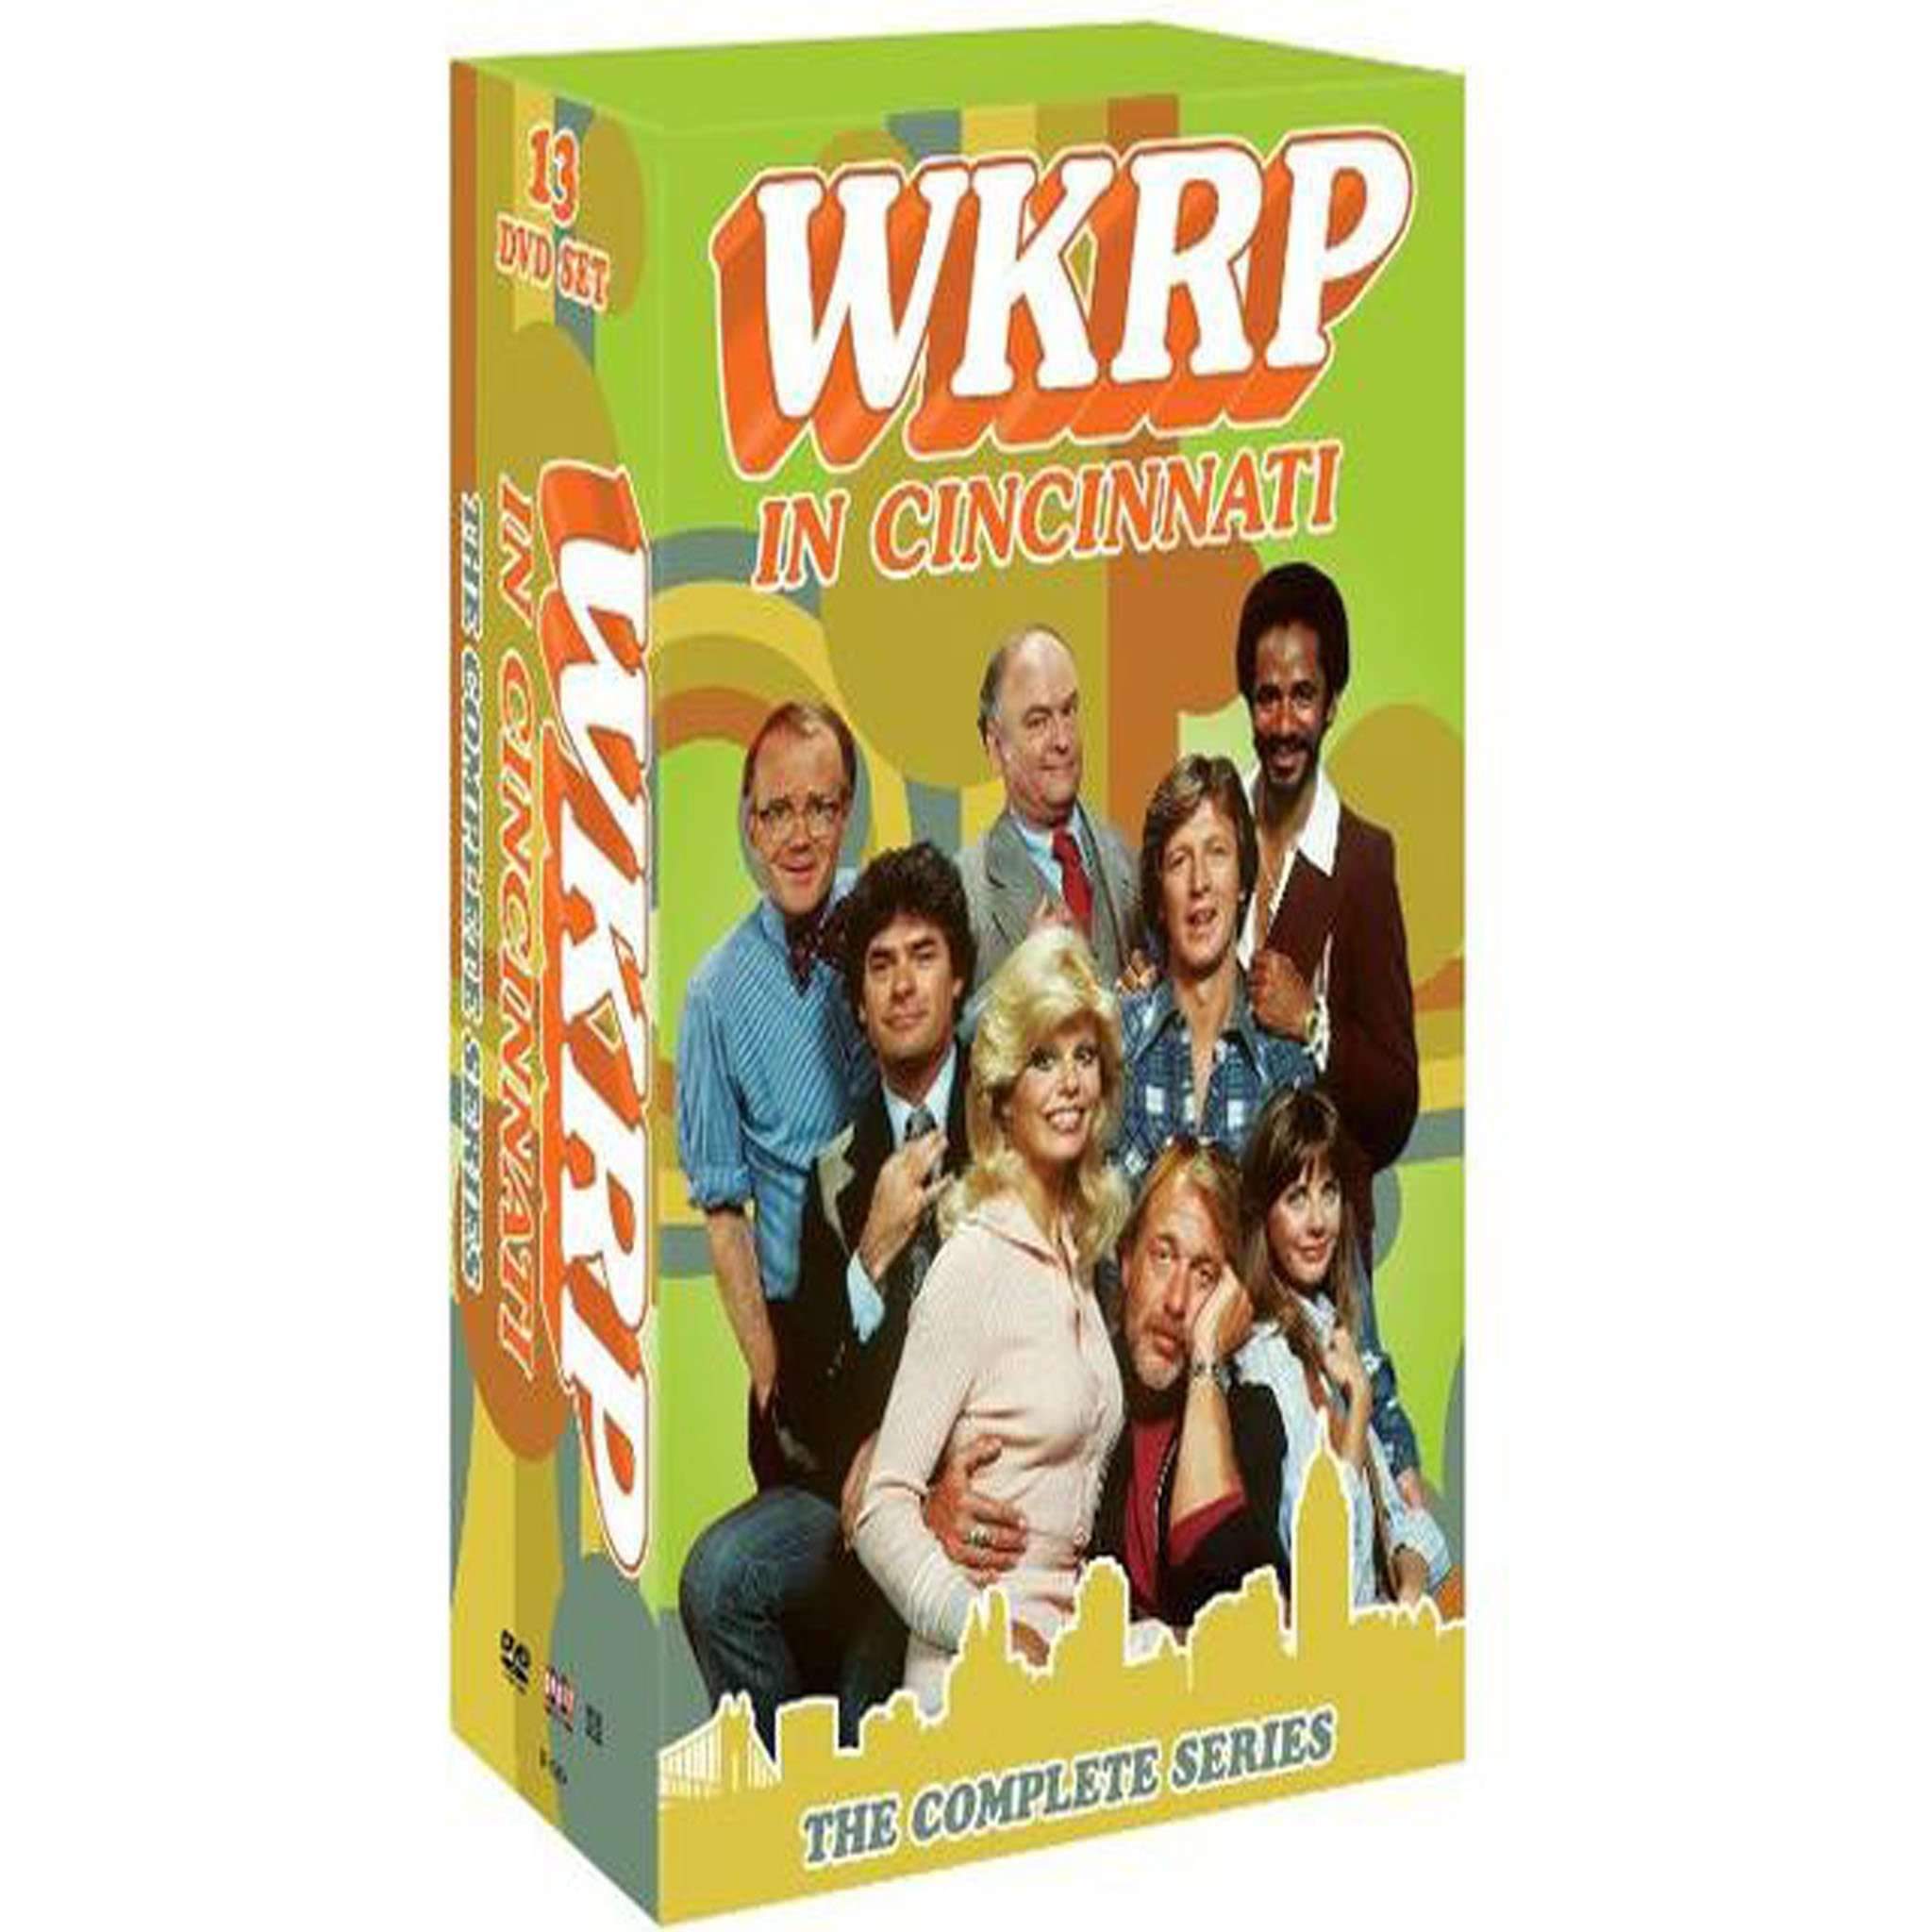 WKRP In Cincinnati DVD Complete Series Box Set Shout! Factory DVDs & Blu-ray Discs > DVDs > Box Sets